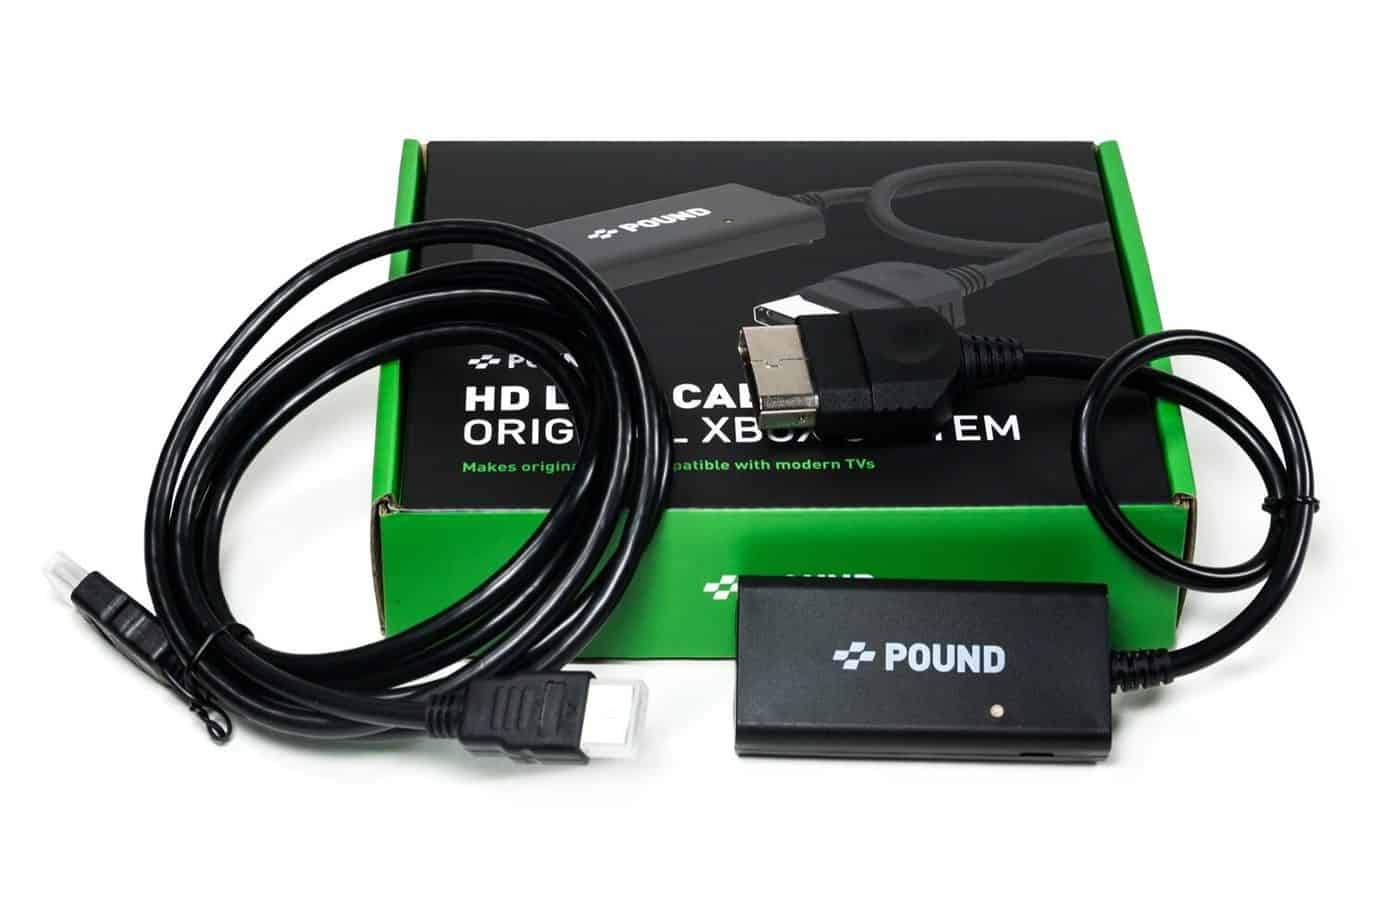 Pound Xbox HDMI Converter cable